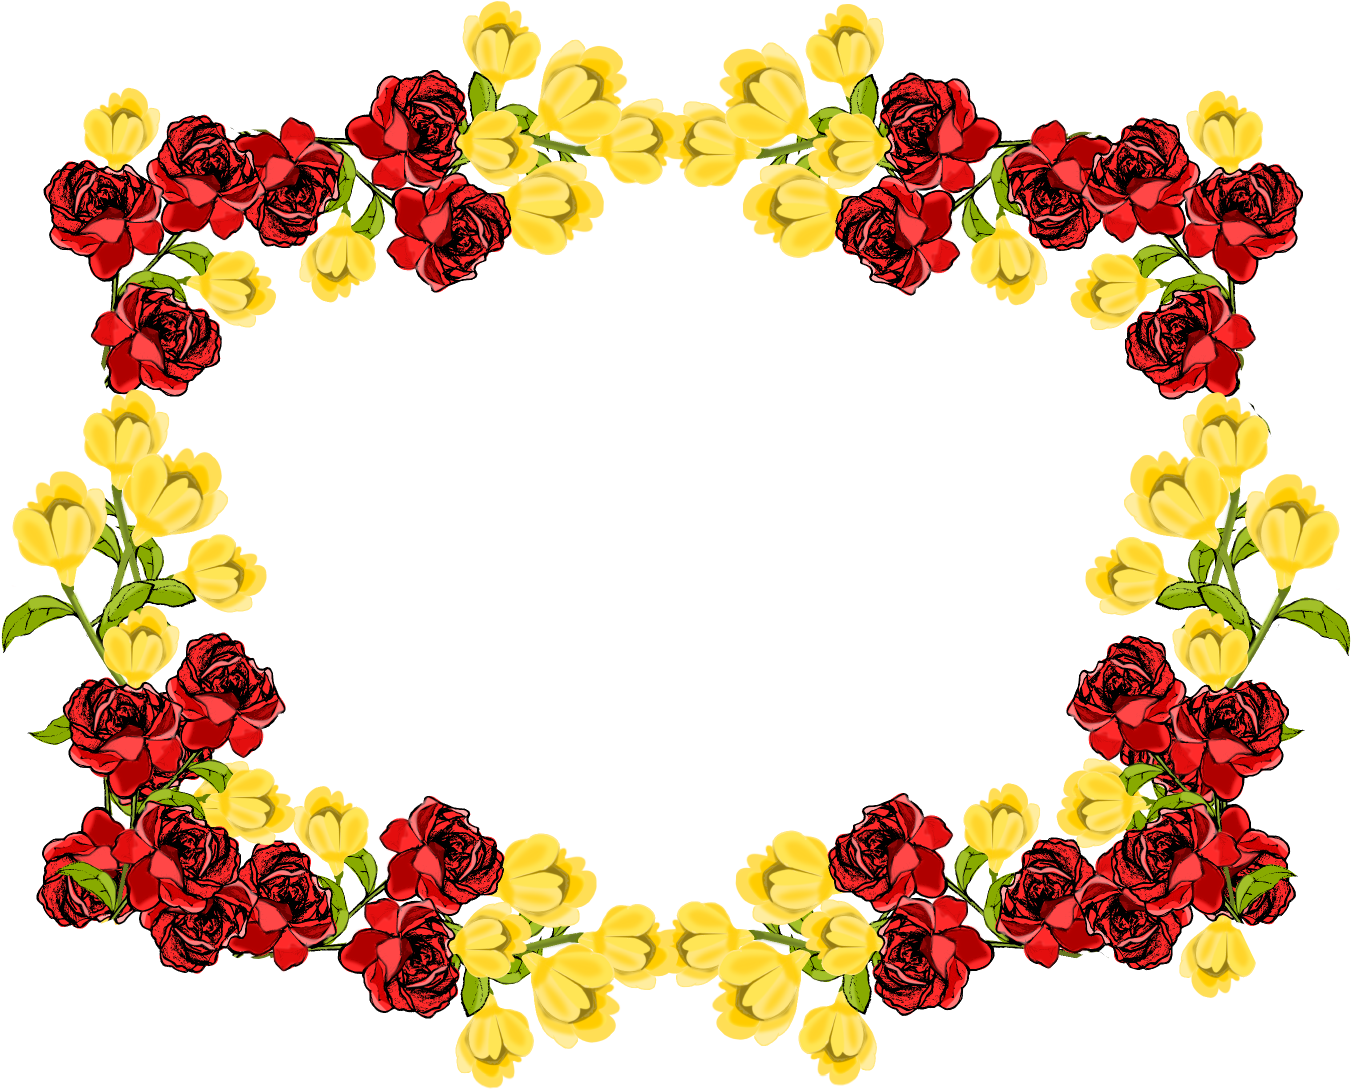 Design Flowers Border Download Free Image PNG Image